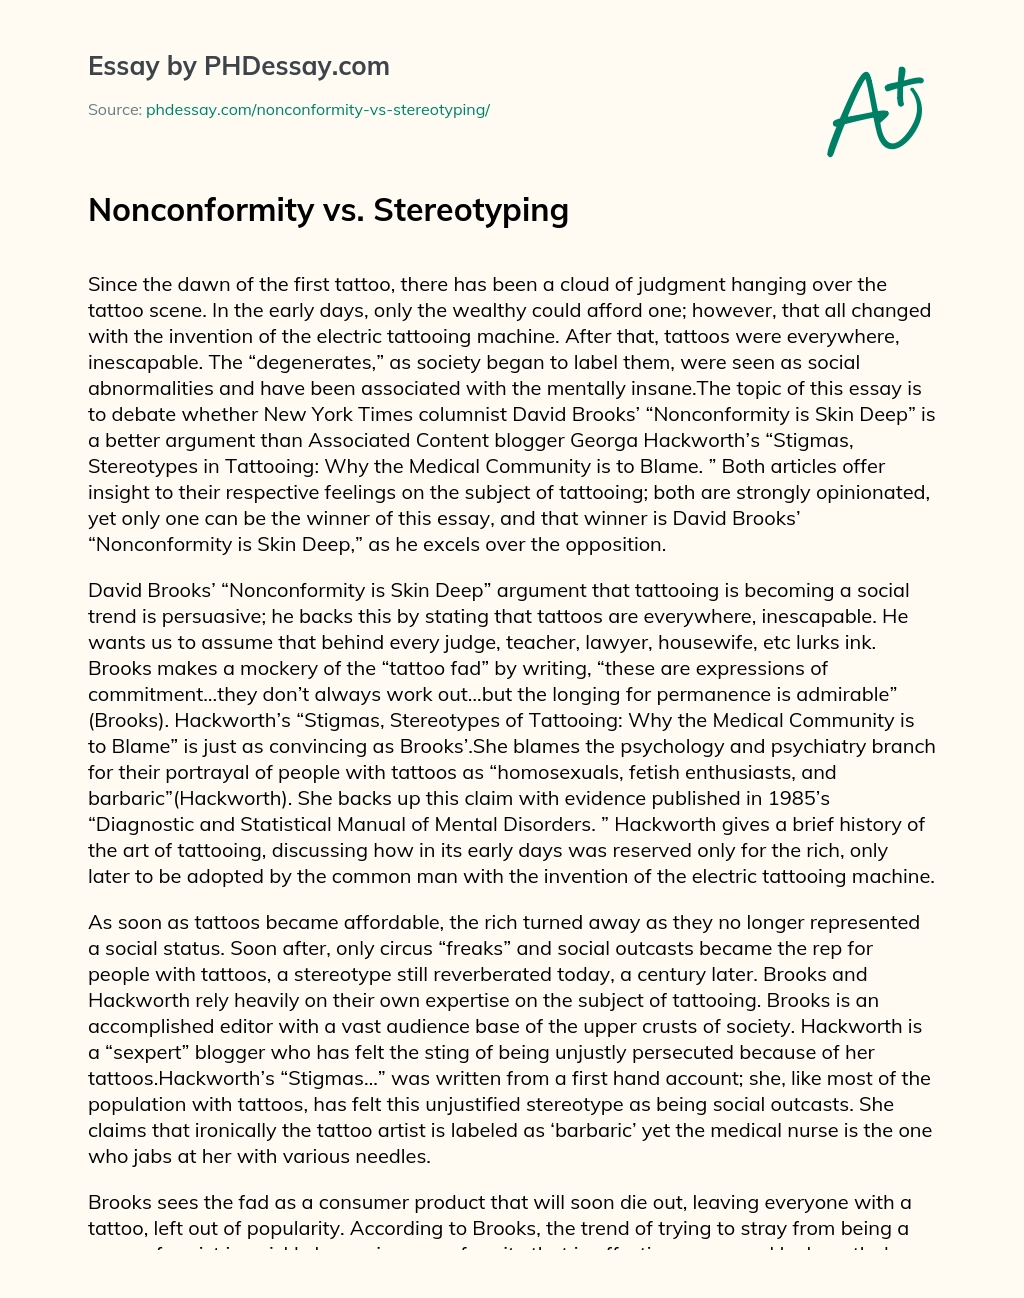 Nonconformity vs. Stereotyping essay